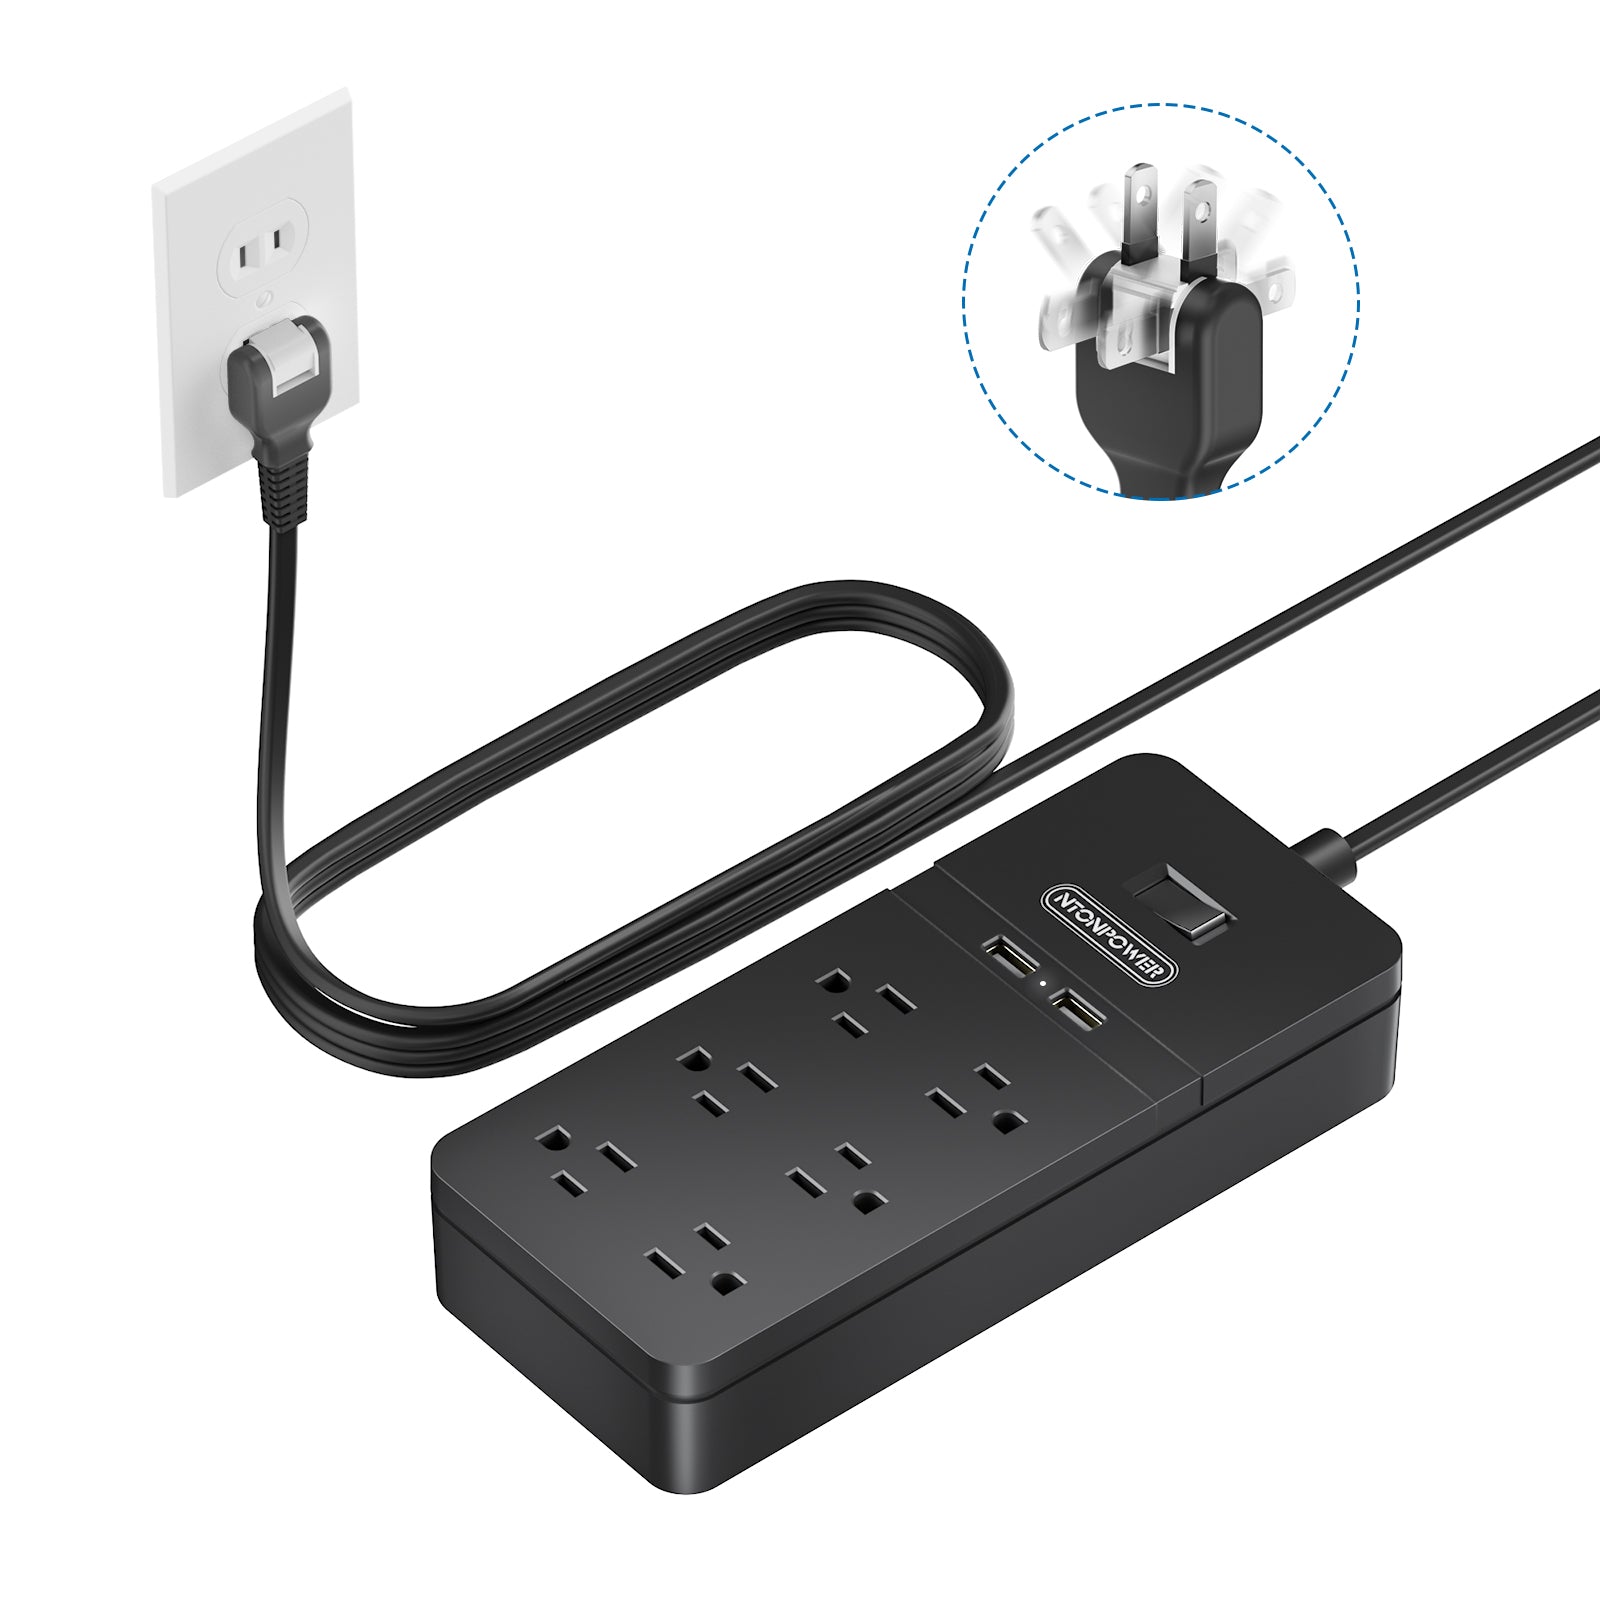 Ntonpower New Surge Protector 2100J 6 Outlets 2 USB Rotating Plug